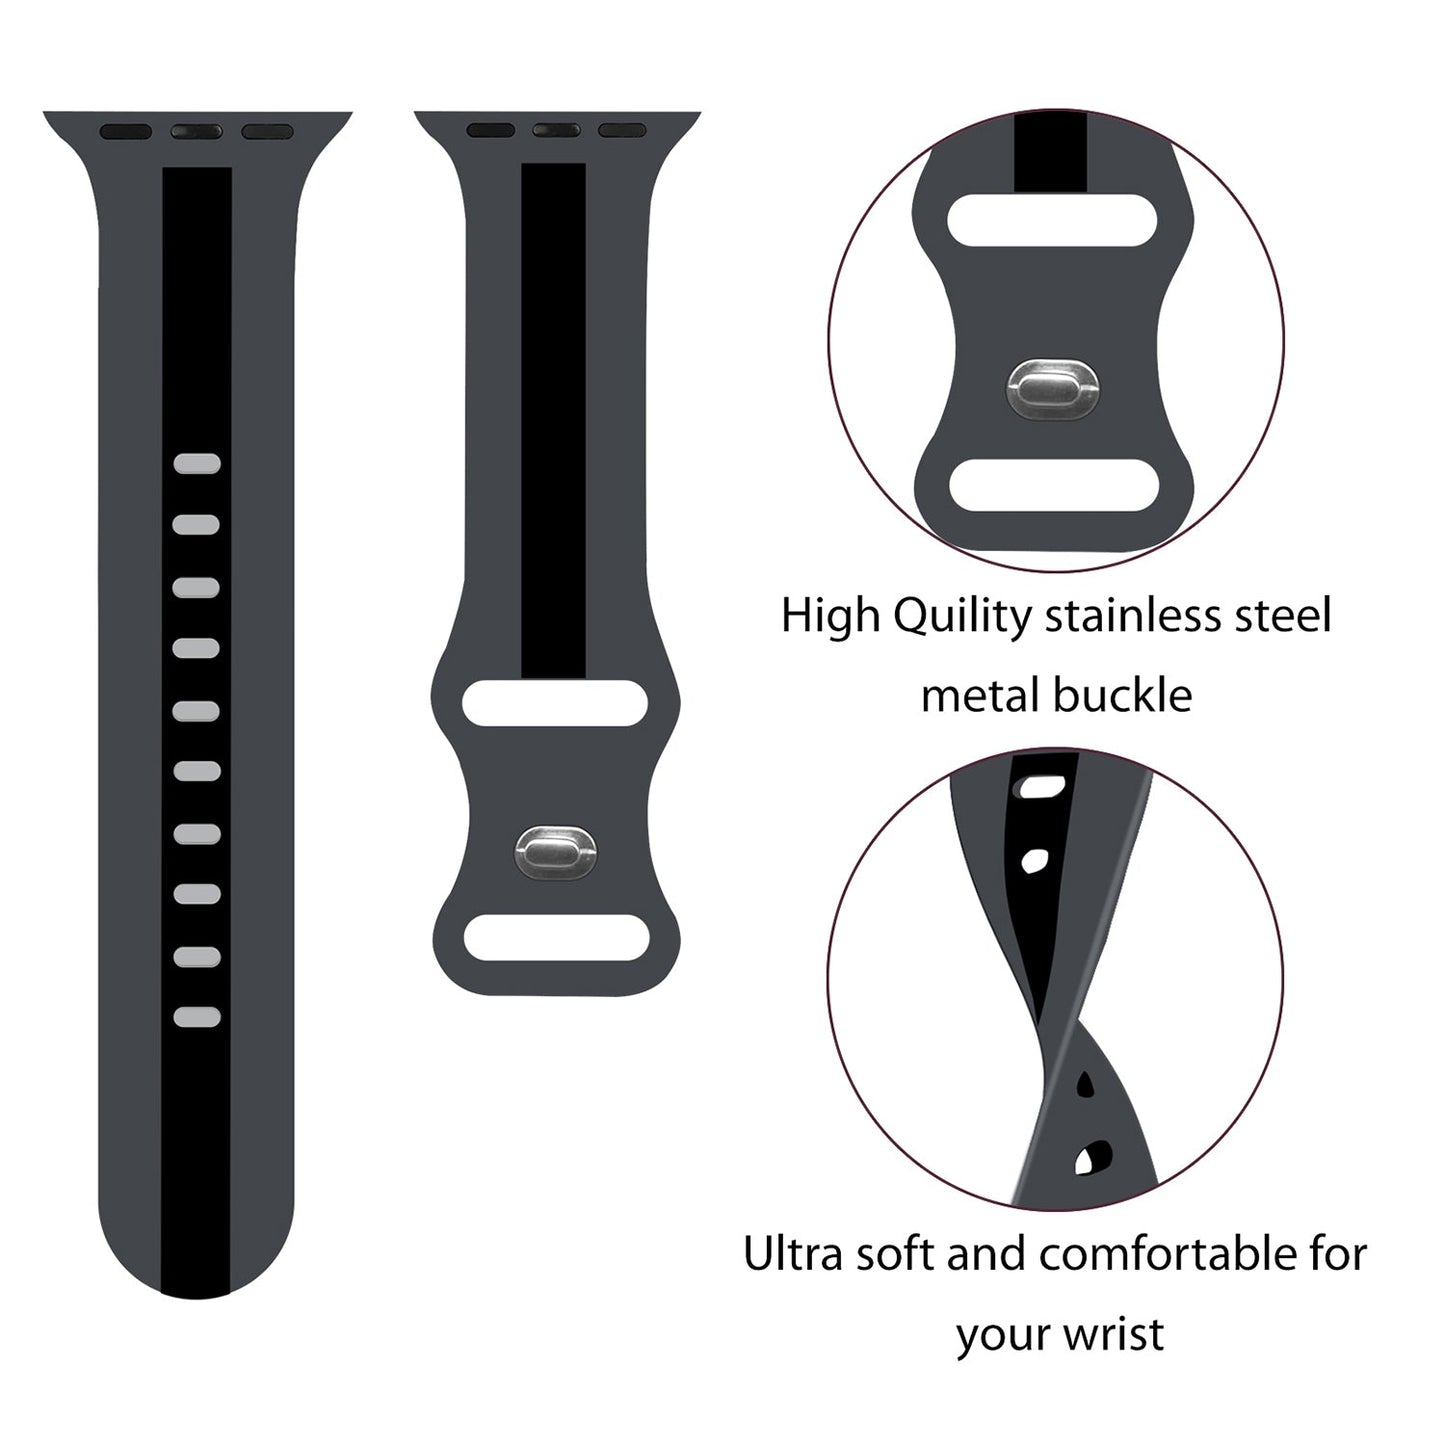 Gripp 40/41mm Tutone Watch Strap - Grey/black